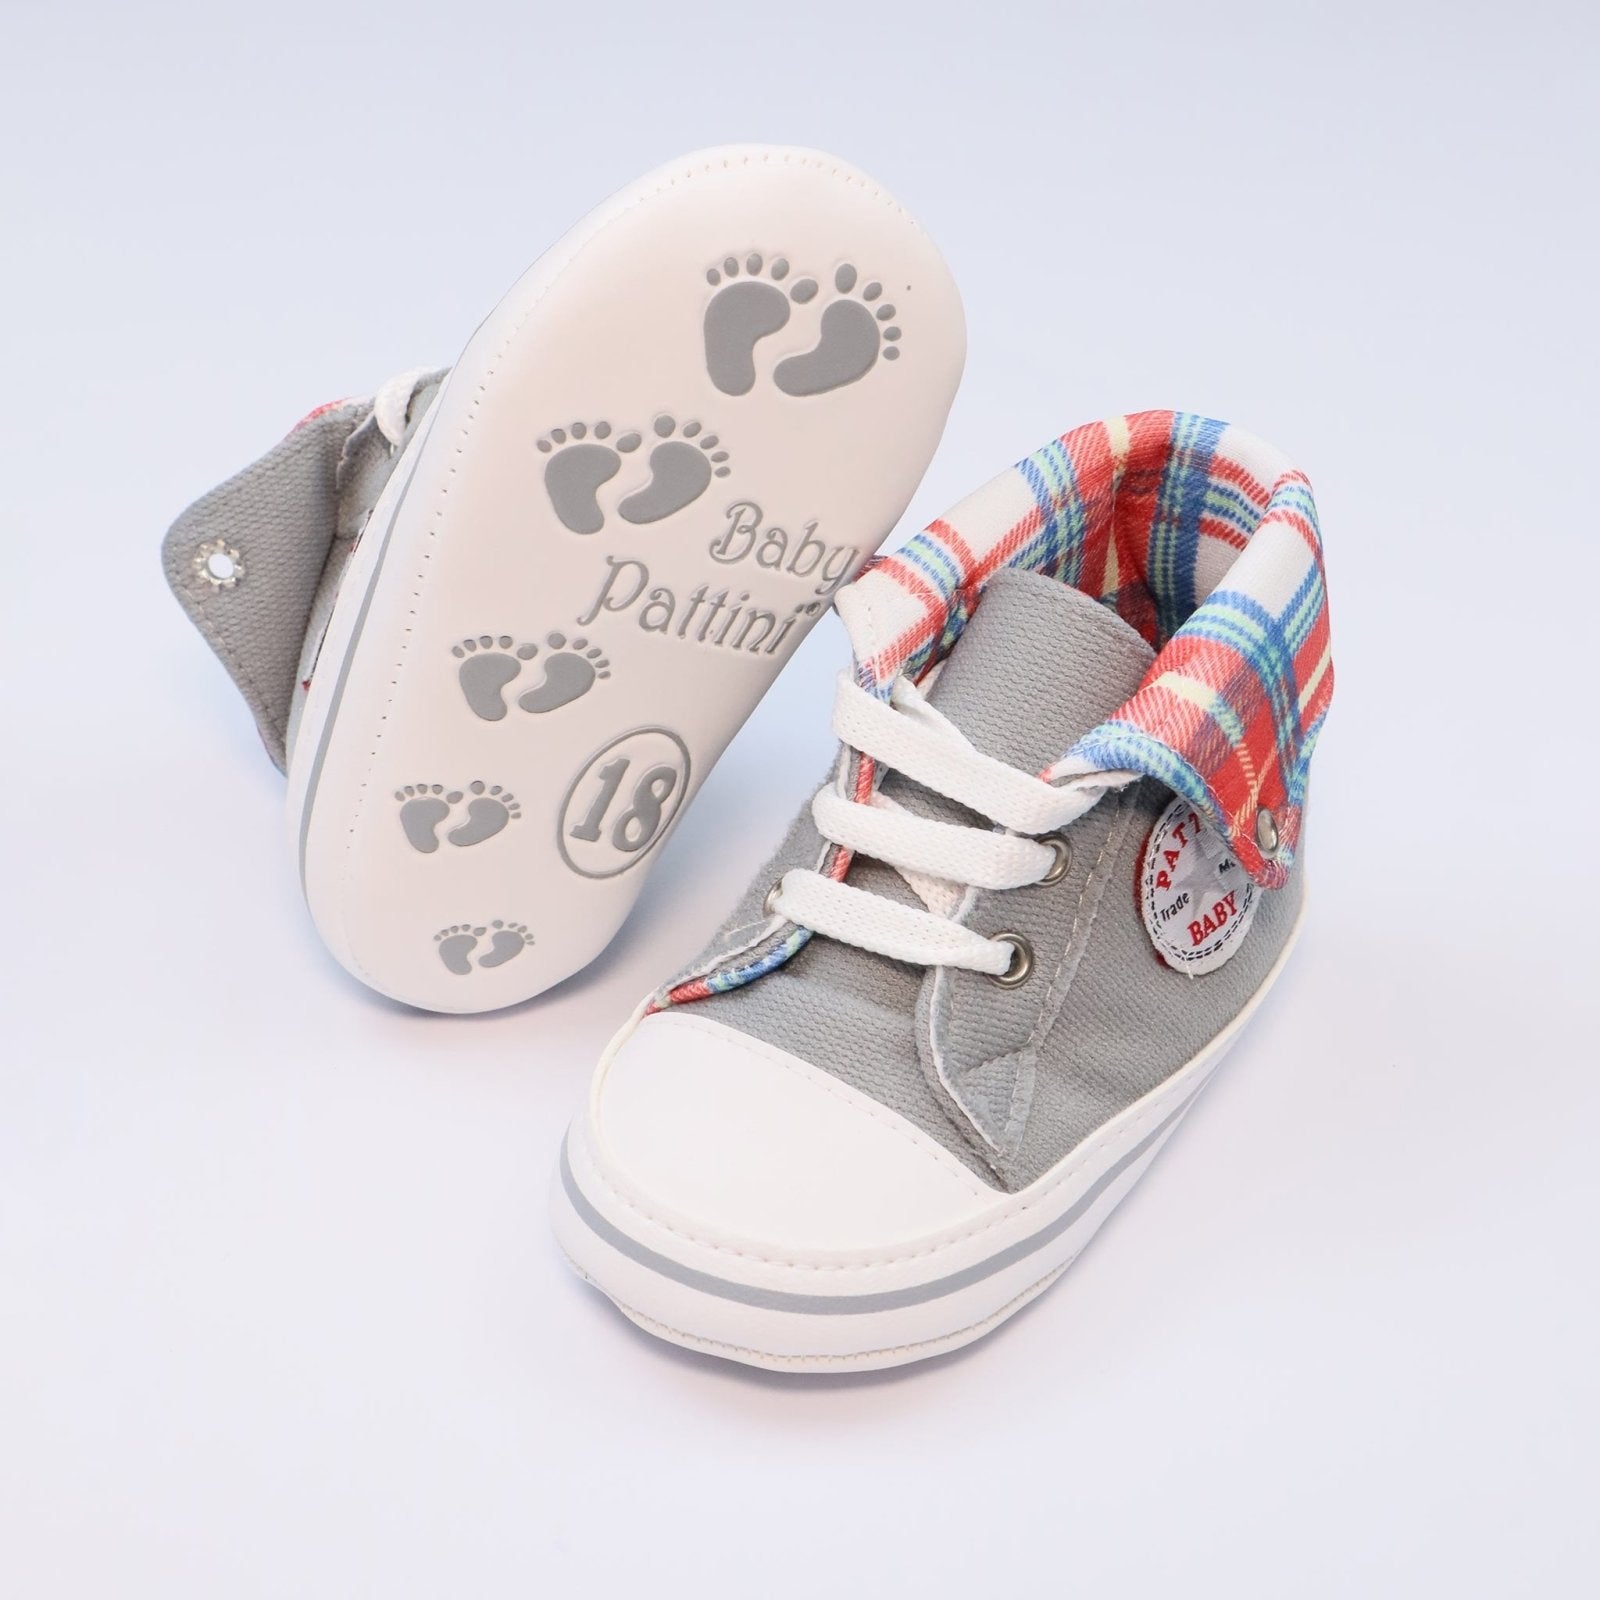 Baby Shoes Gray Color Check Print | Baby Pattini - Zubaidas Mothershop